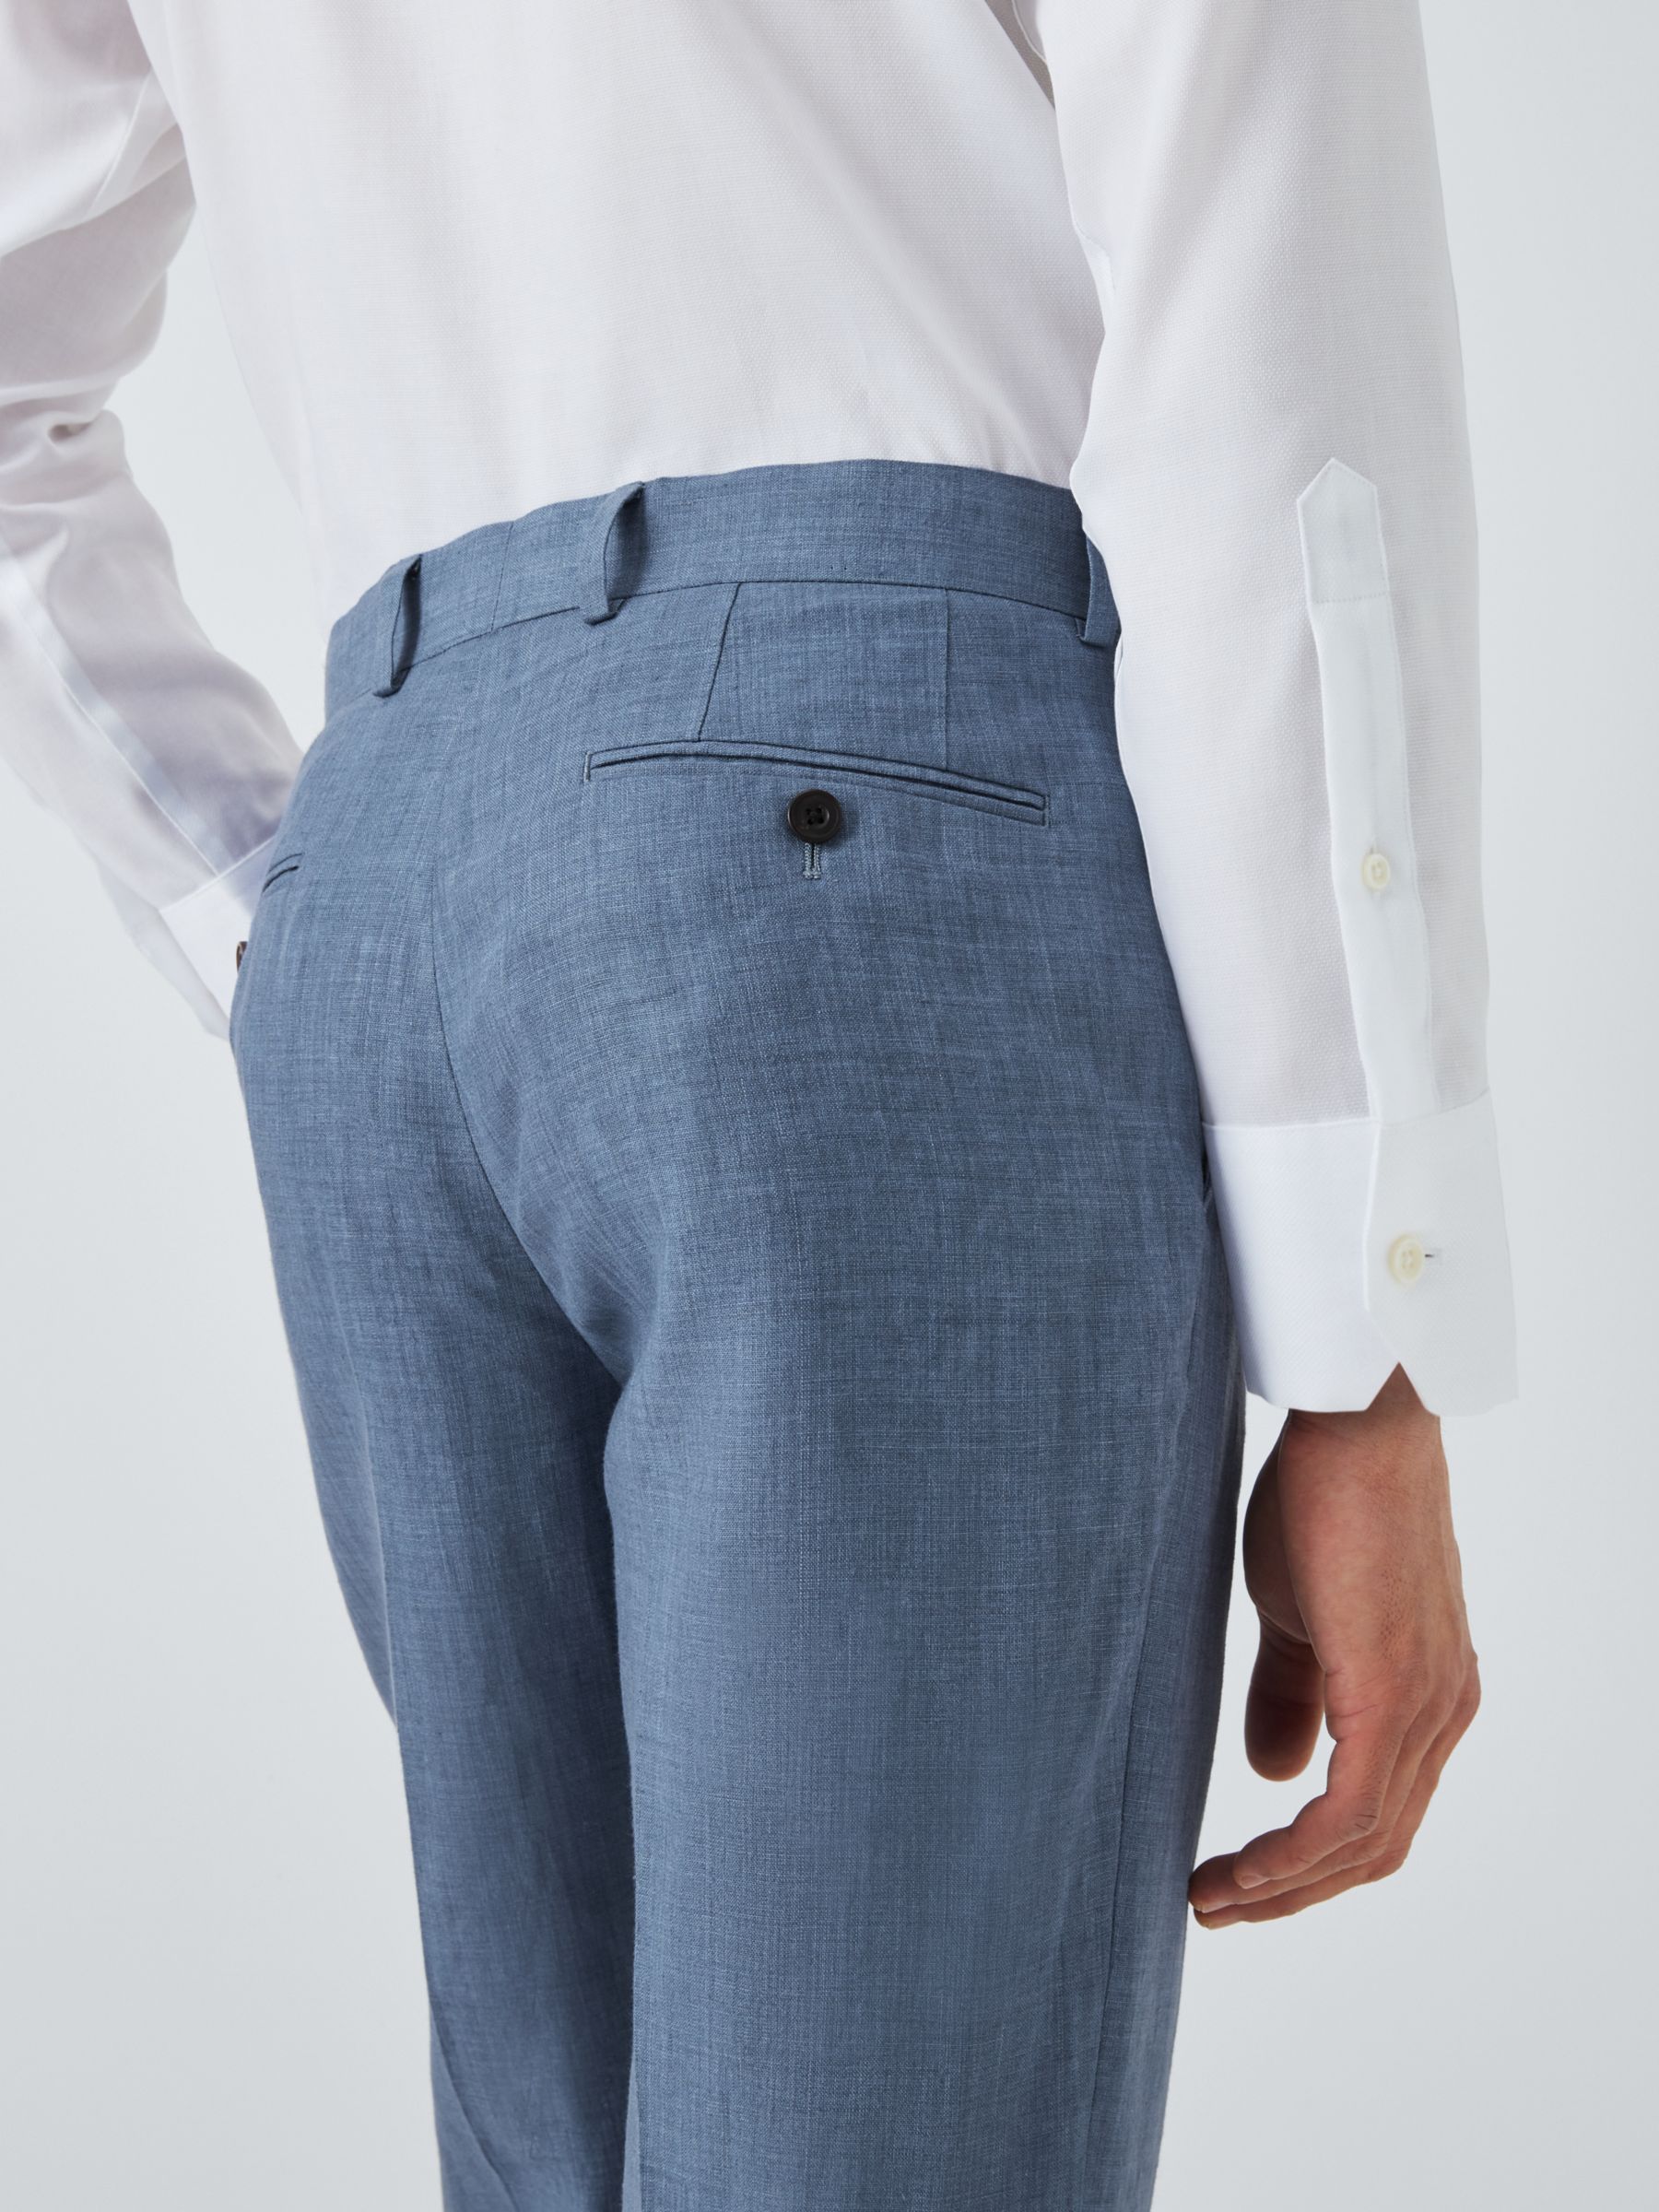 Buy John Lewis Cambridge Linen Regular Fit Trousers Online at johnlewis.com